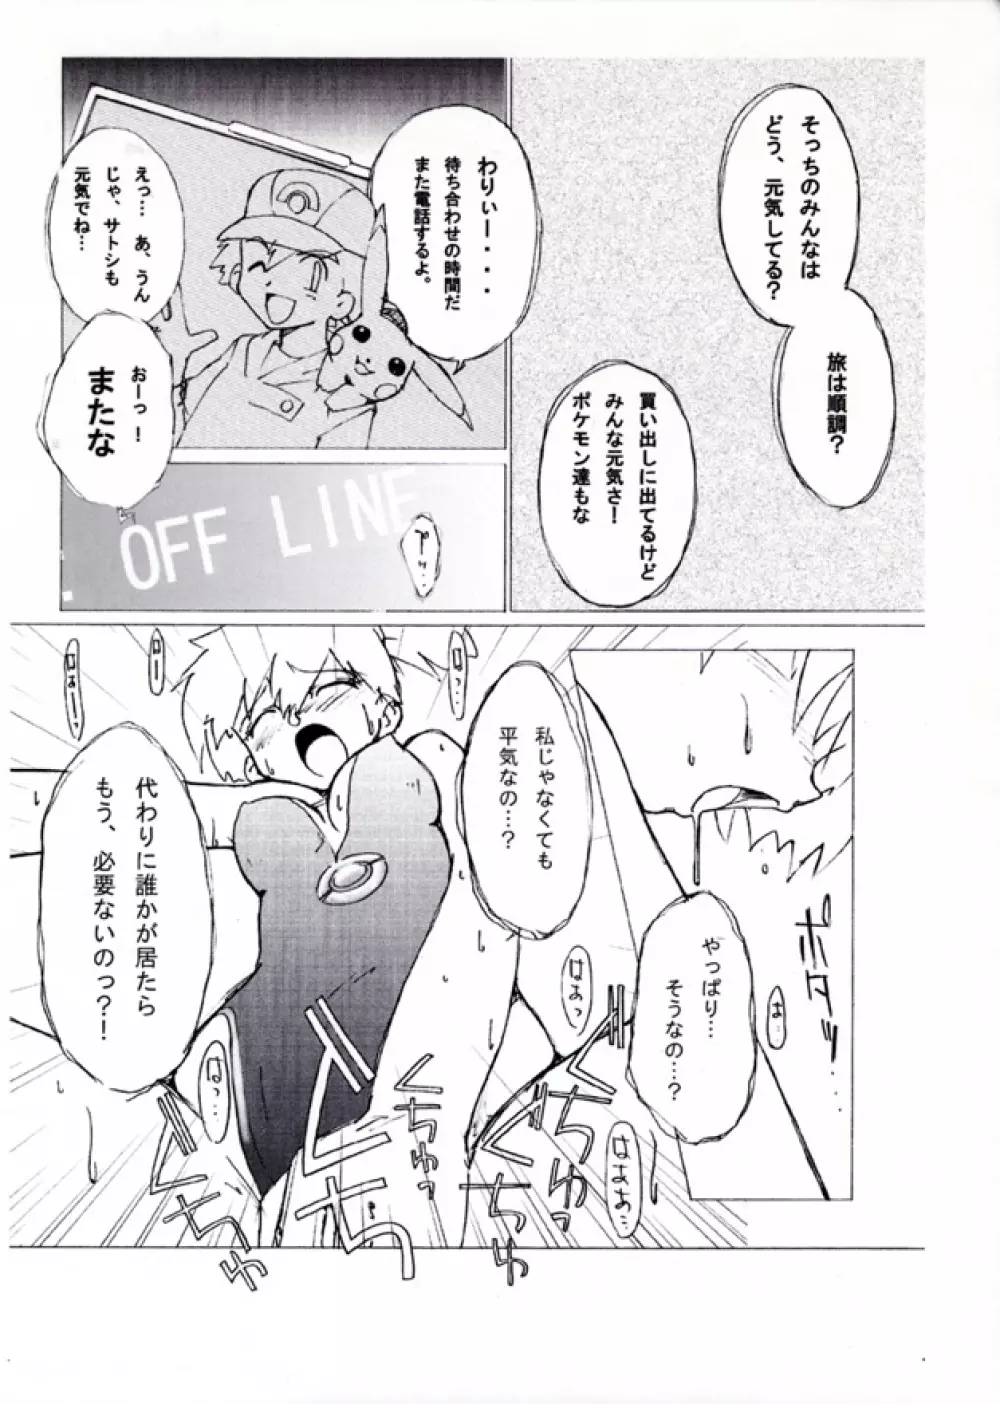 KASUMIX XPLOSION Kasumi Comic part5 - page25